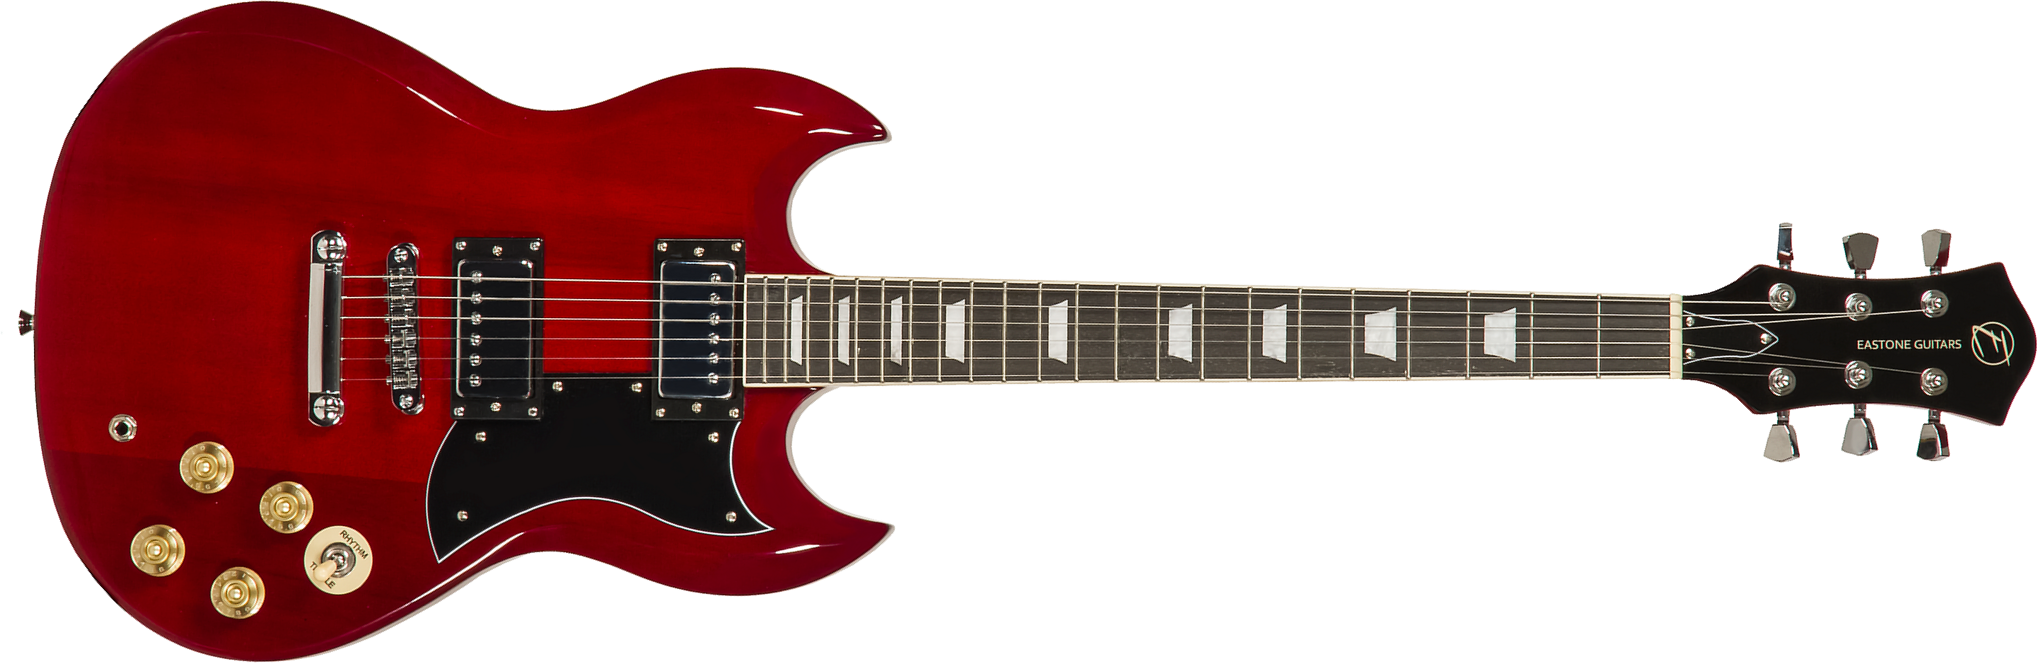 Eastone Sdc70 Hh Ht Pur - Red - Double Cut E-Gitarre - Main picture